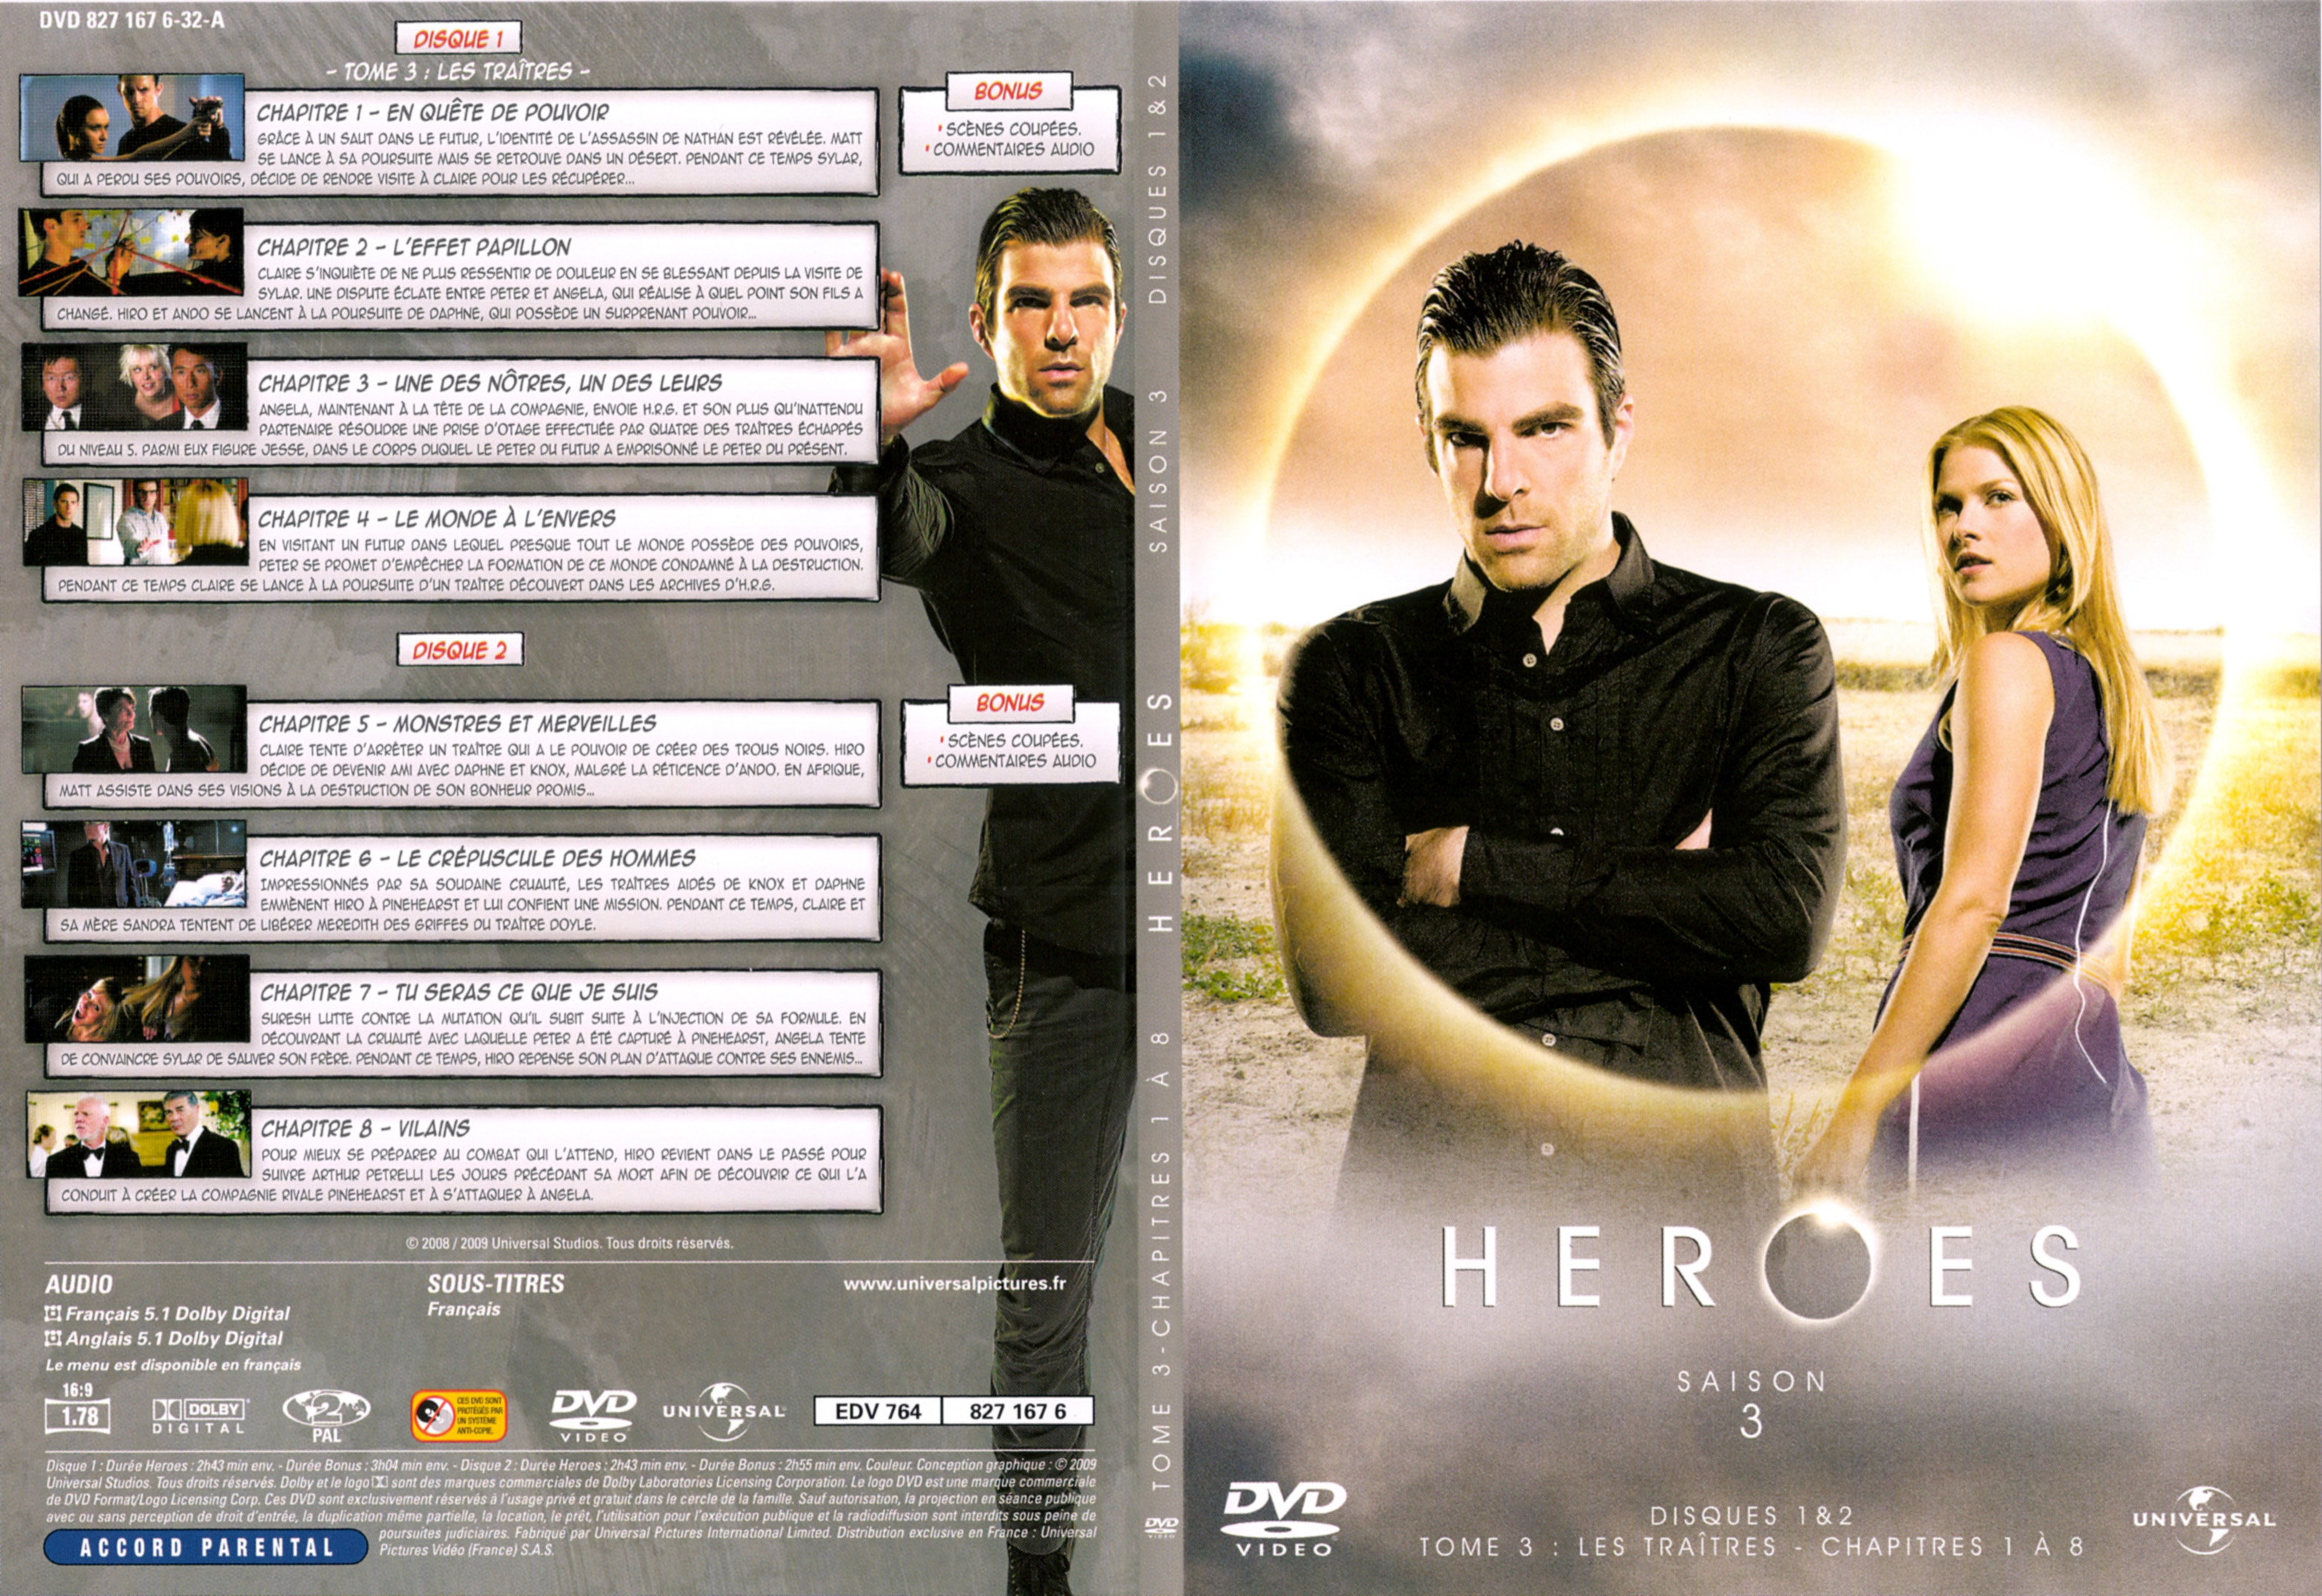 Jaquette DVD Heroes Saison 3 DVD 1